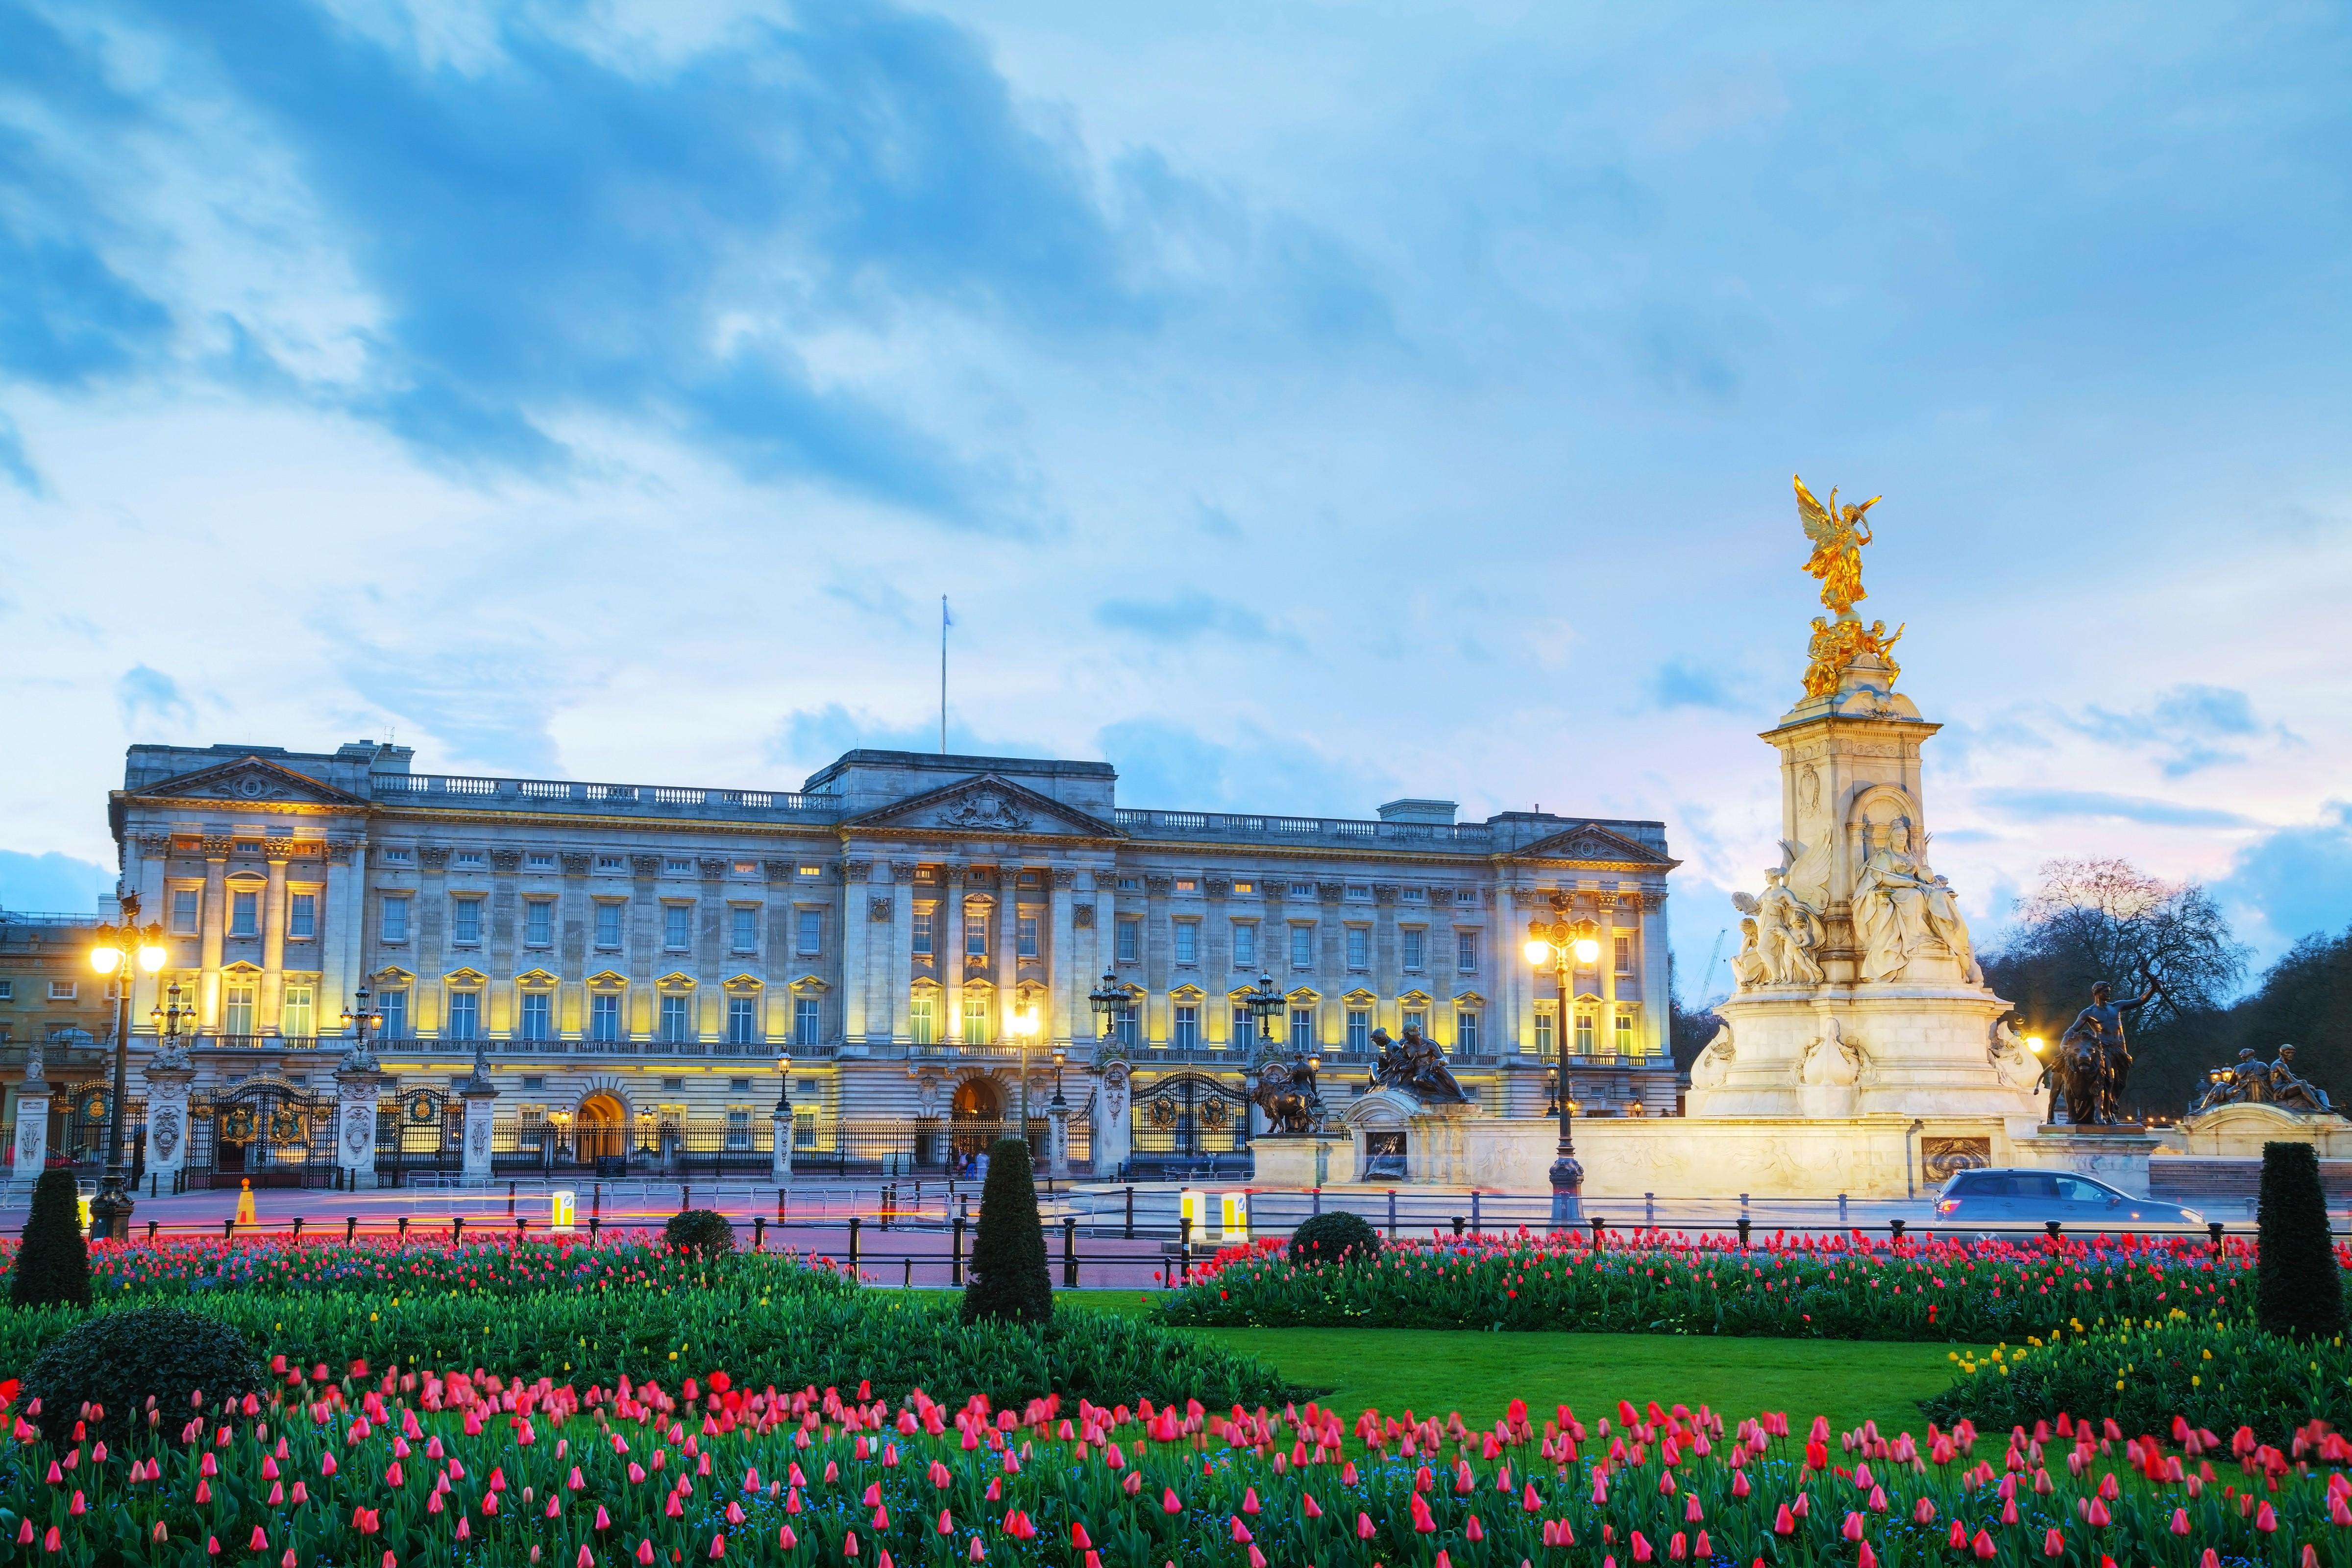 Beautiful Wallpaper of Buckingham Palace in London England